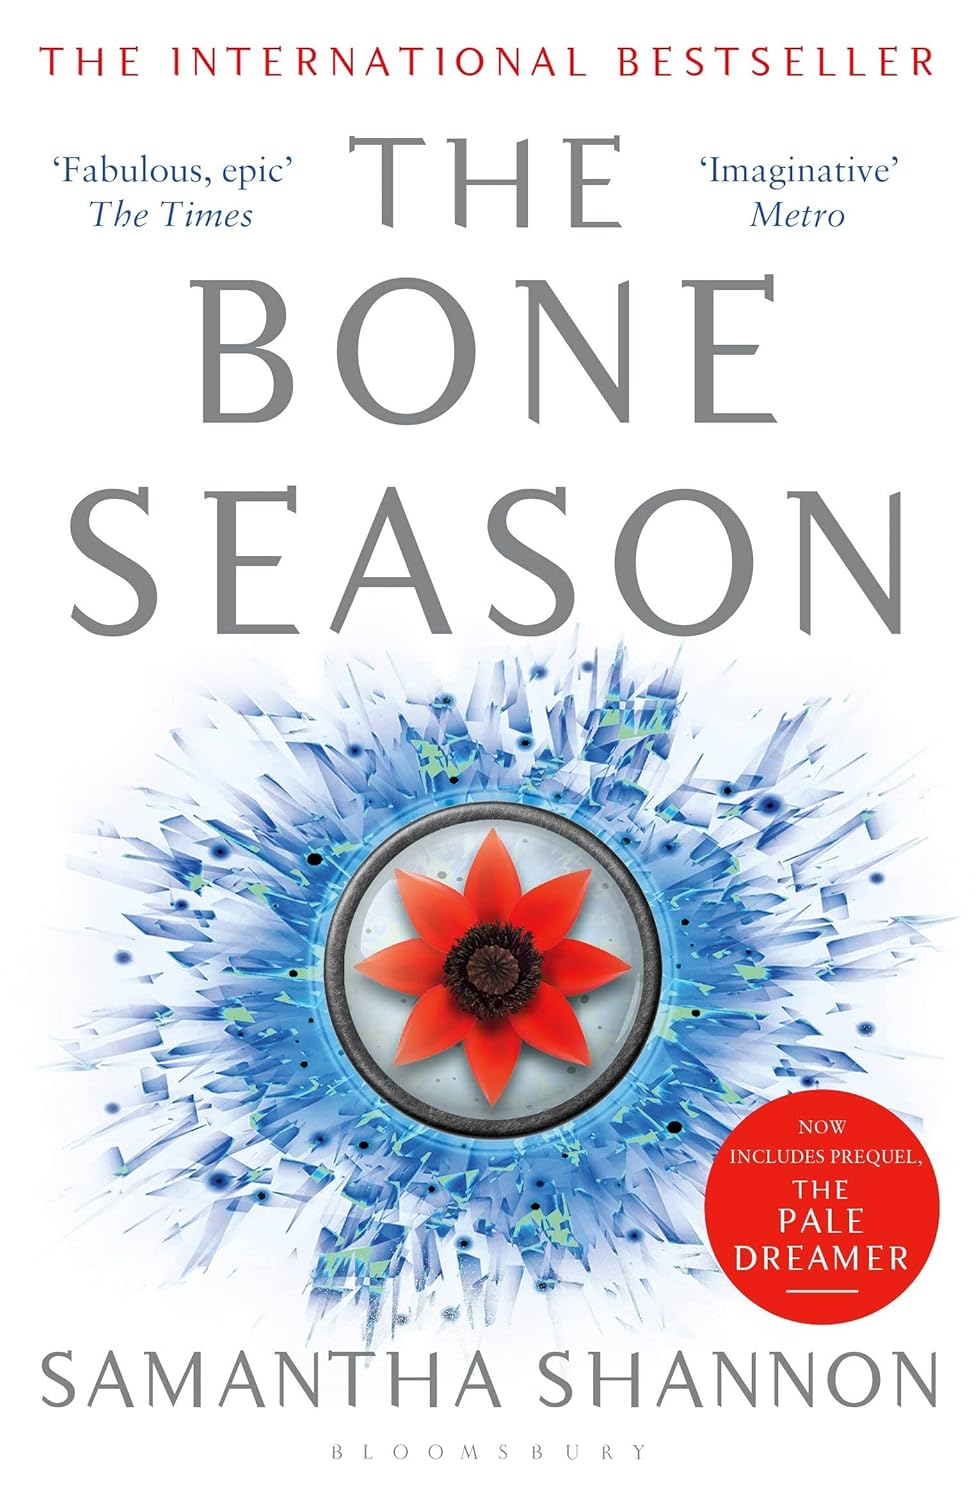 The Bone Season by Samantha Shannon (Author)